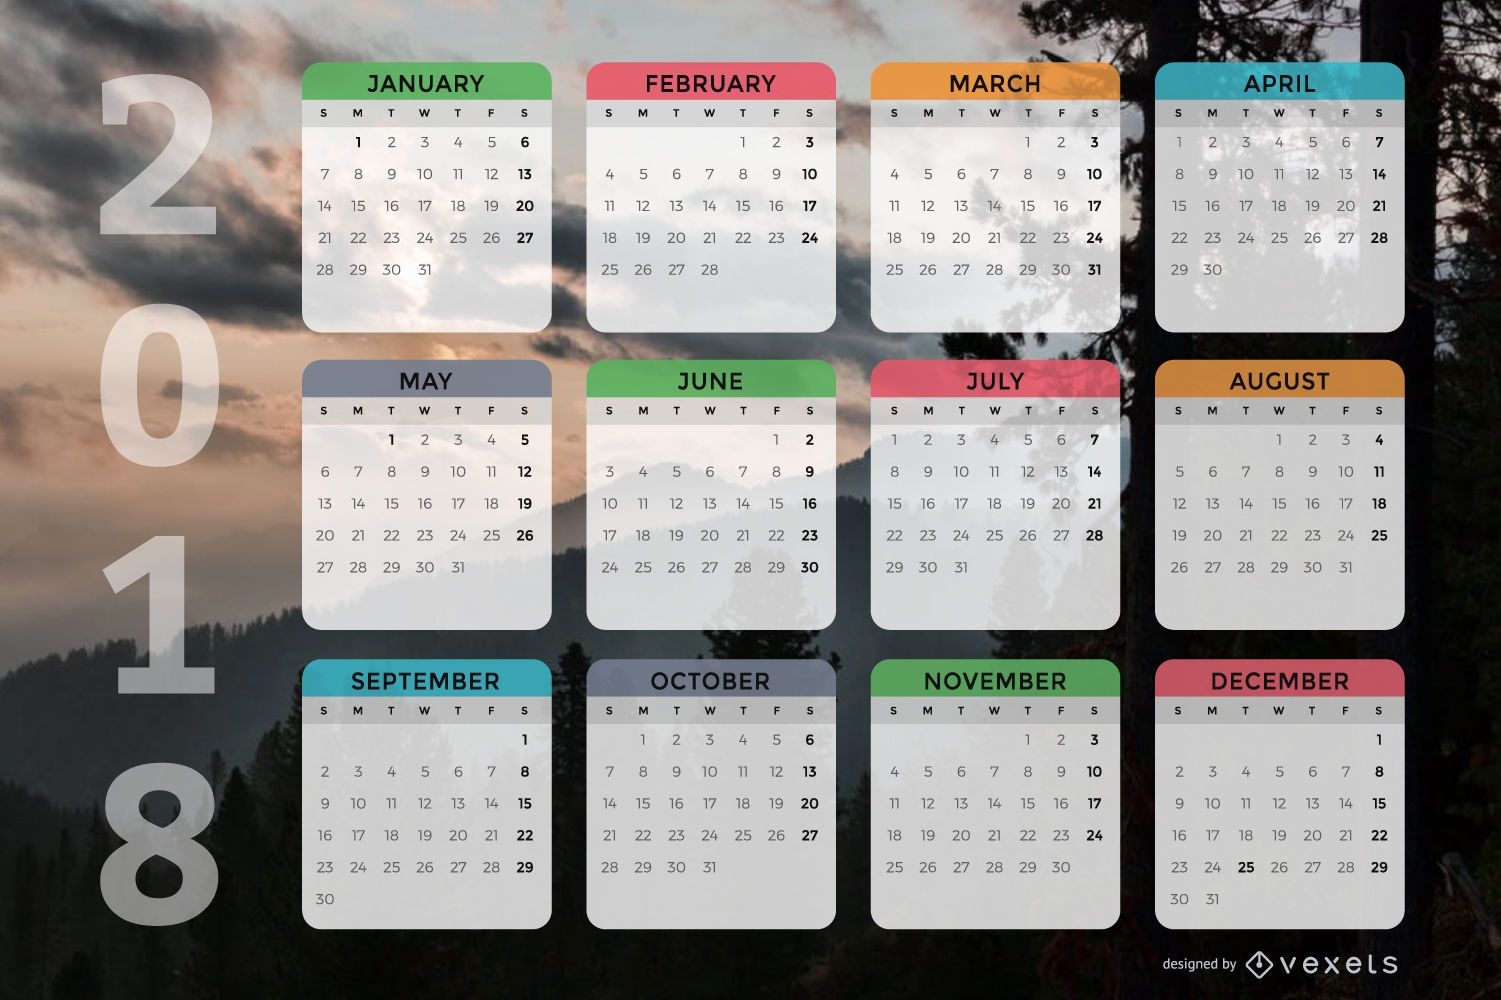 2018 monthly calendar design